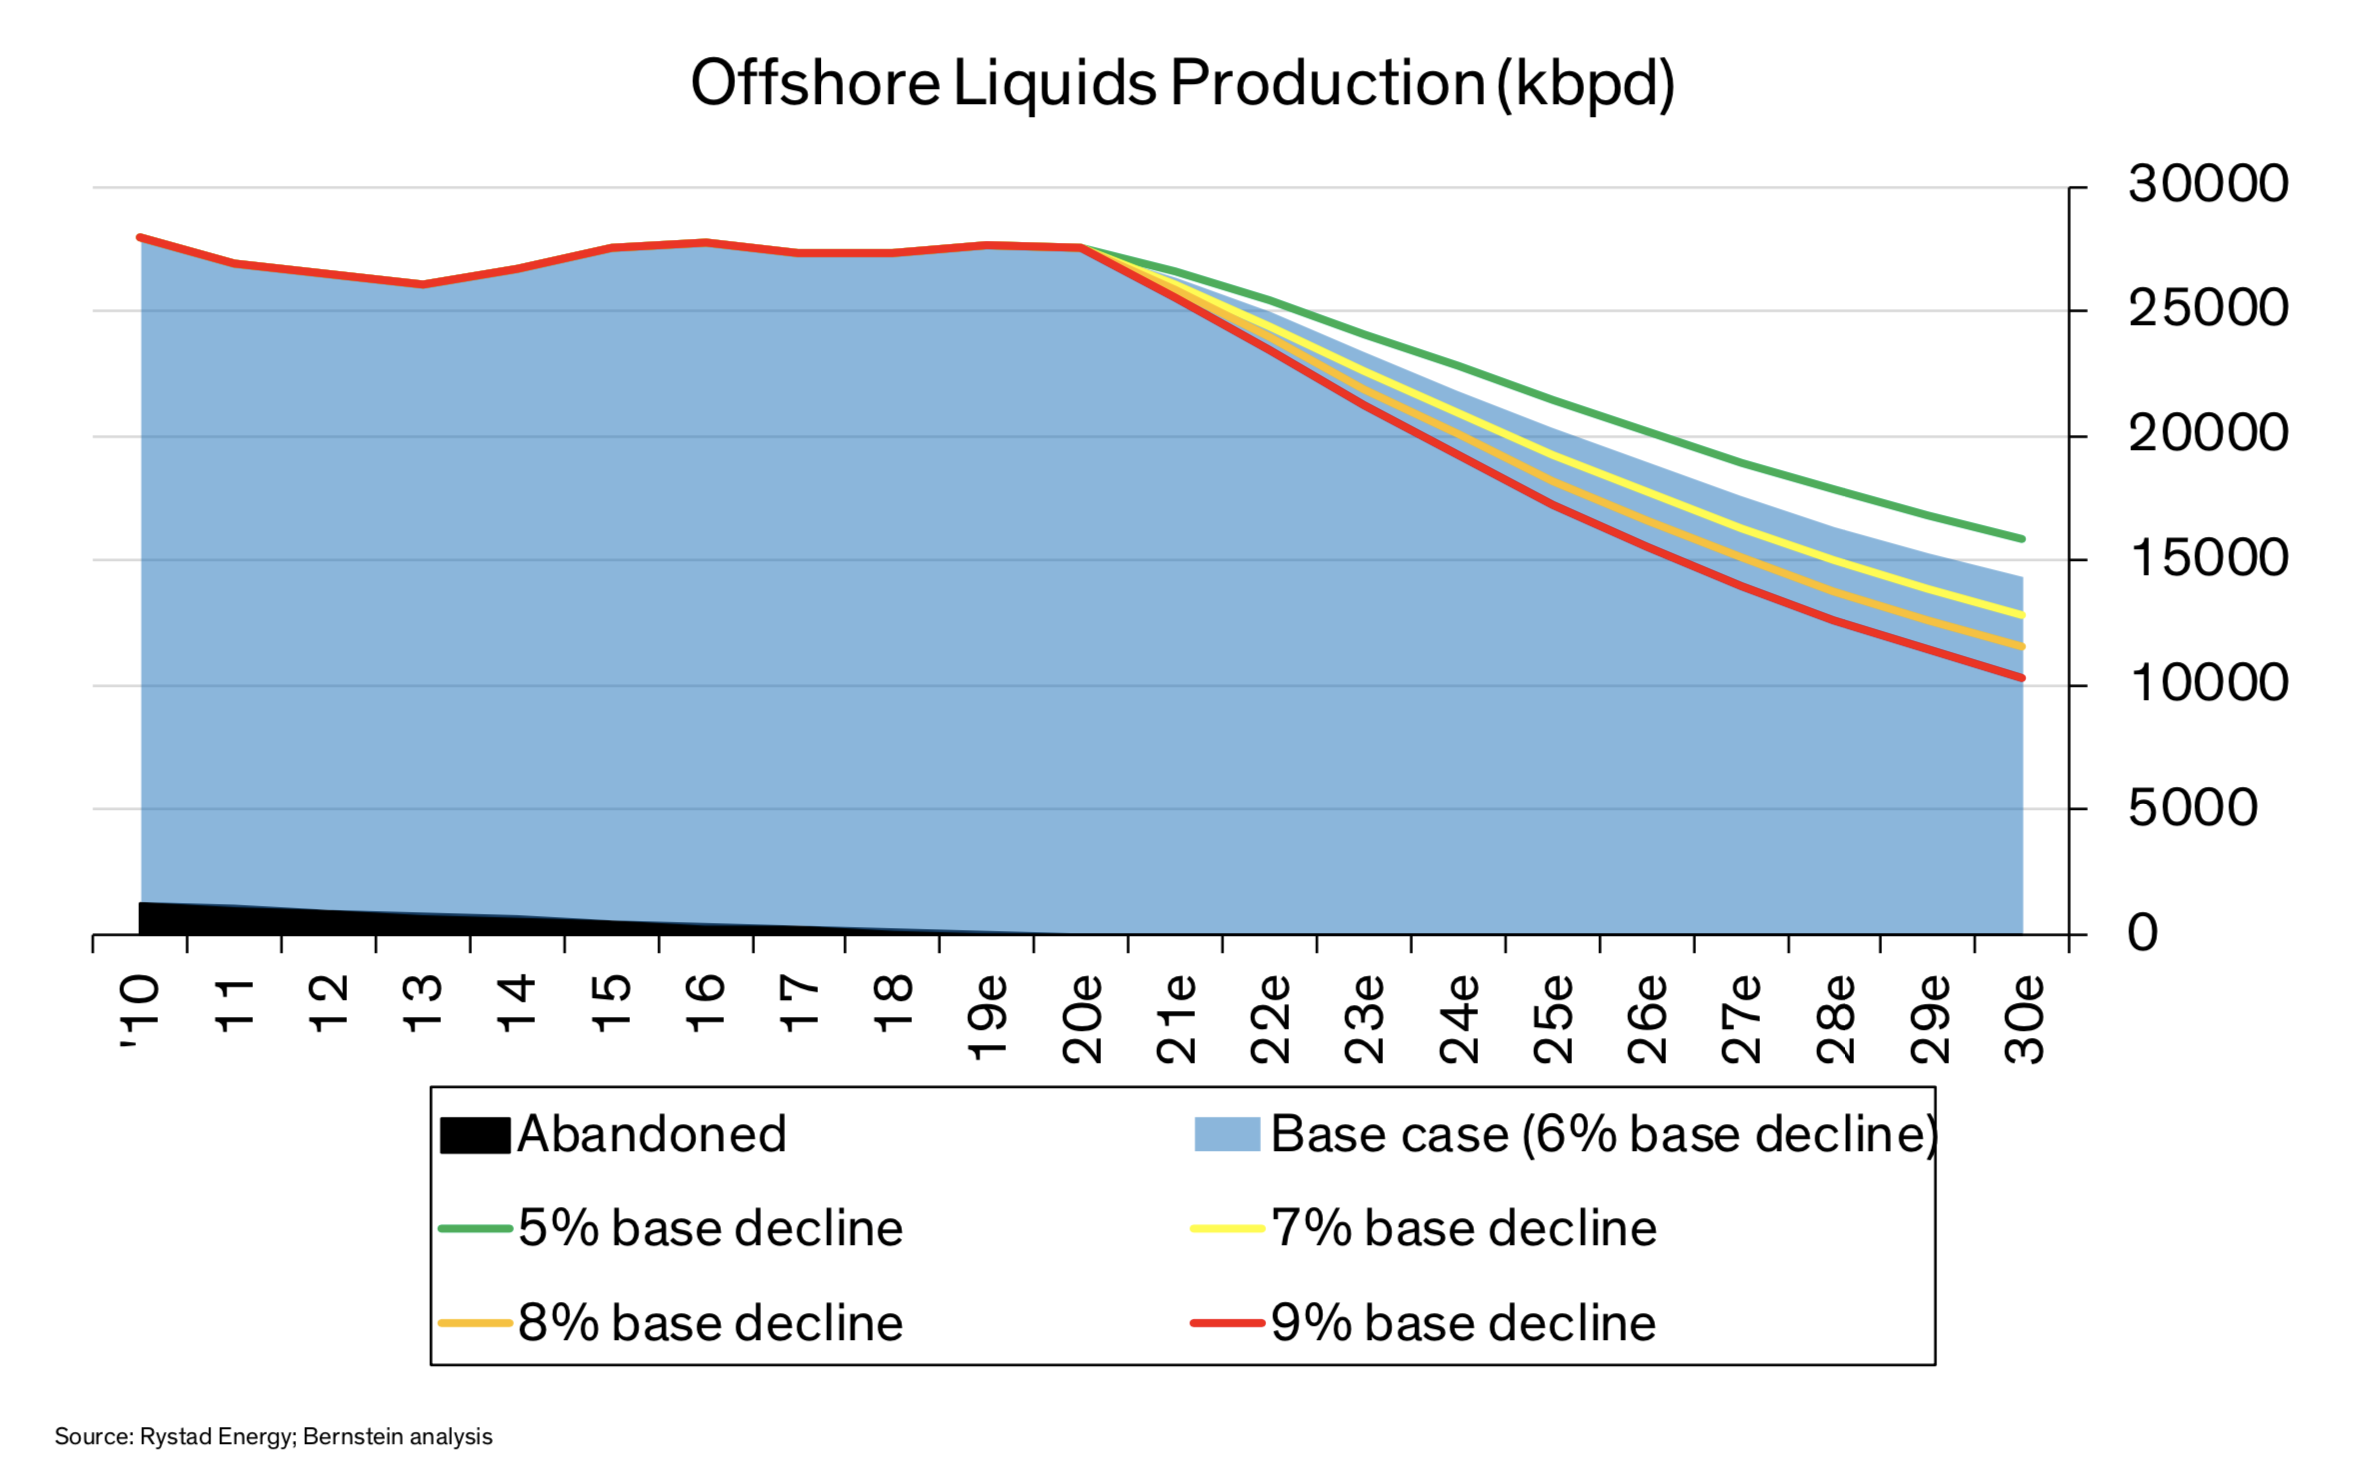 Offshore Liquids Production Exhibit 2 (Source: Bernstein Research)